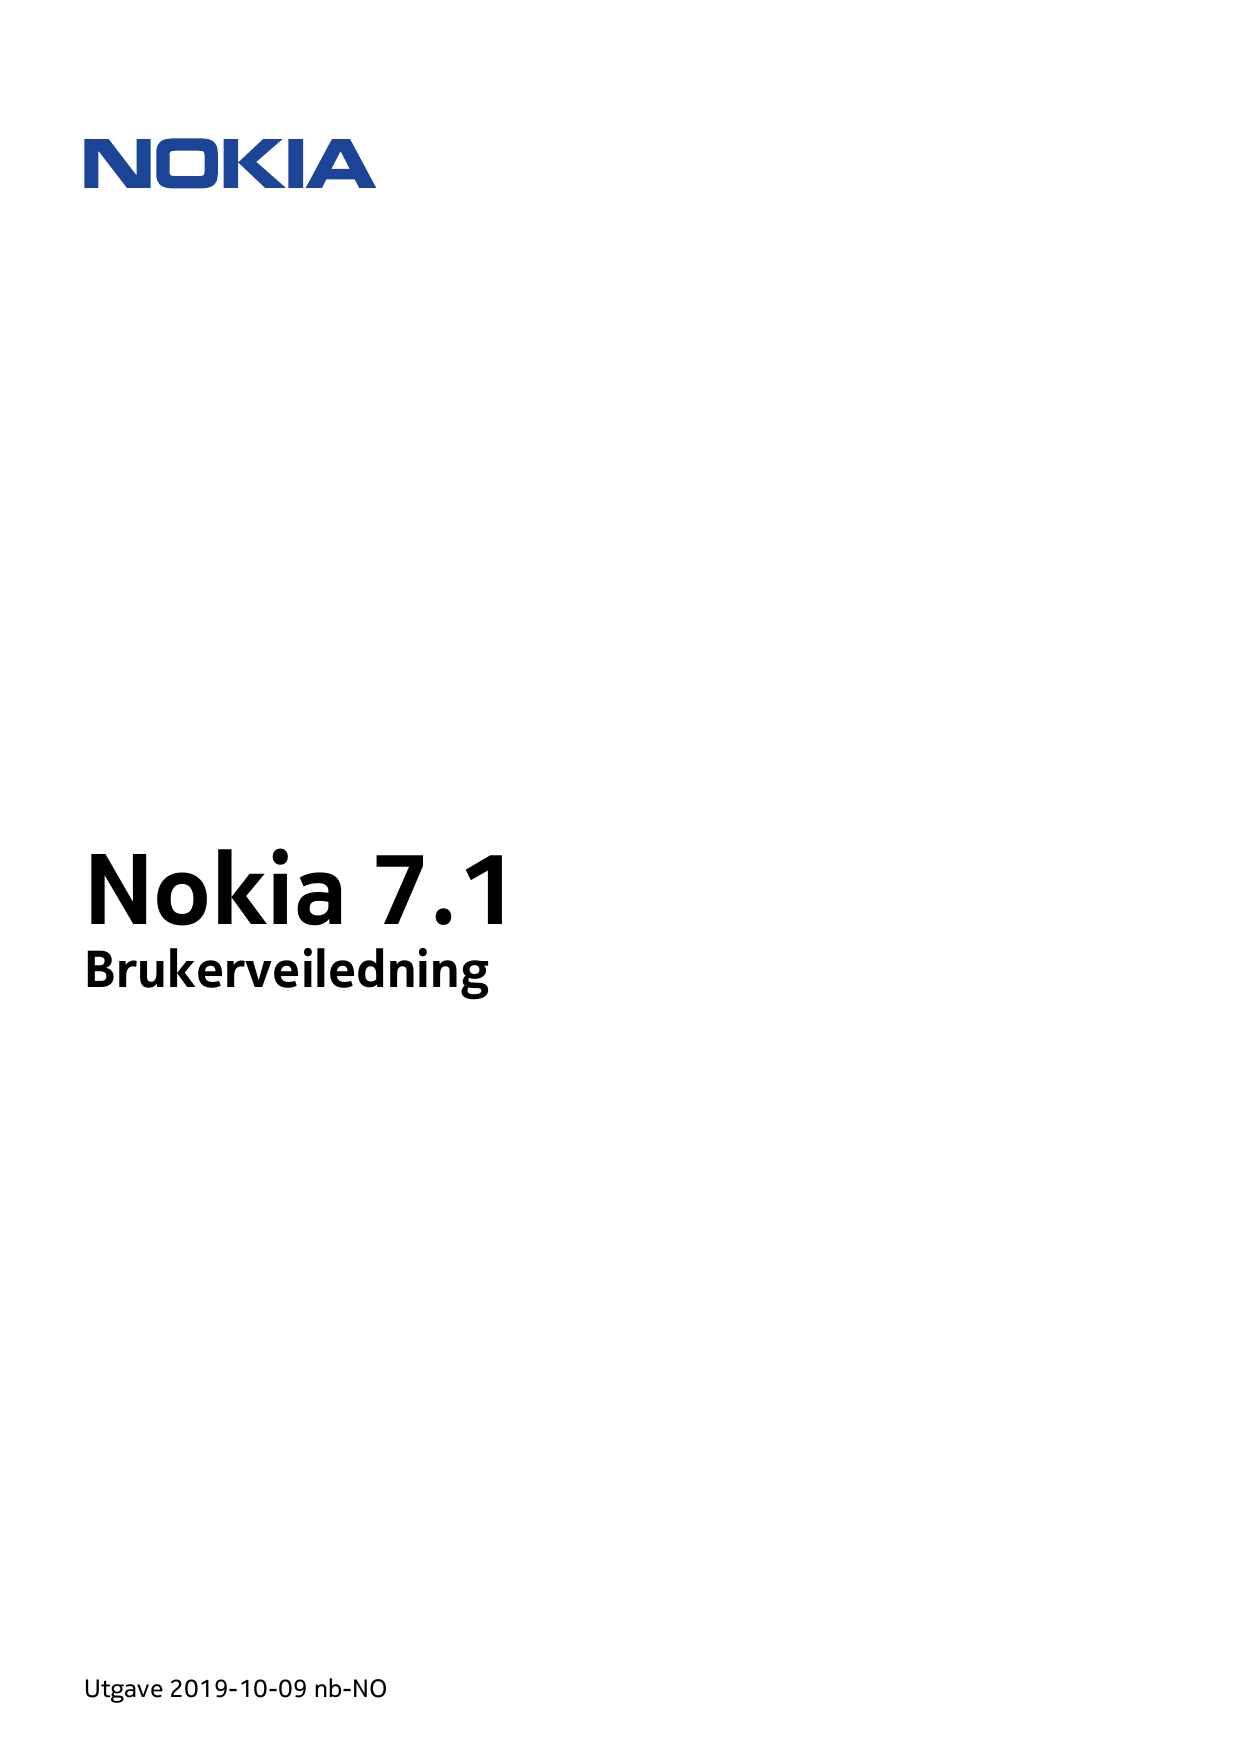 Nokia 7.1BrukerveiledningUtgave 2019-10-09 nb-NO